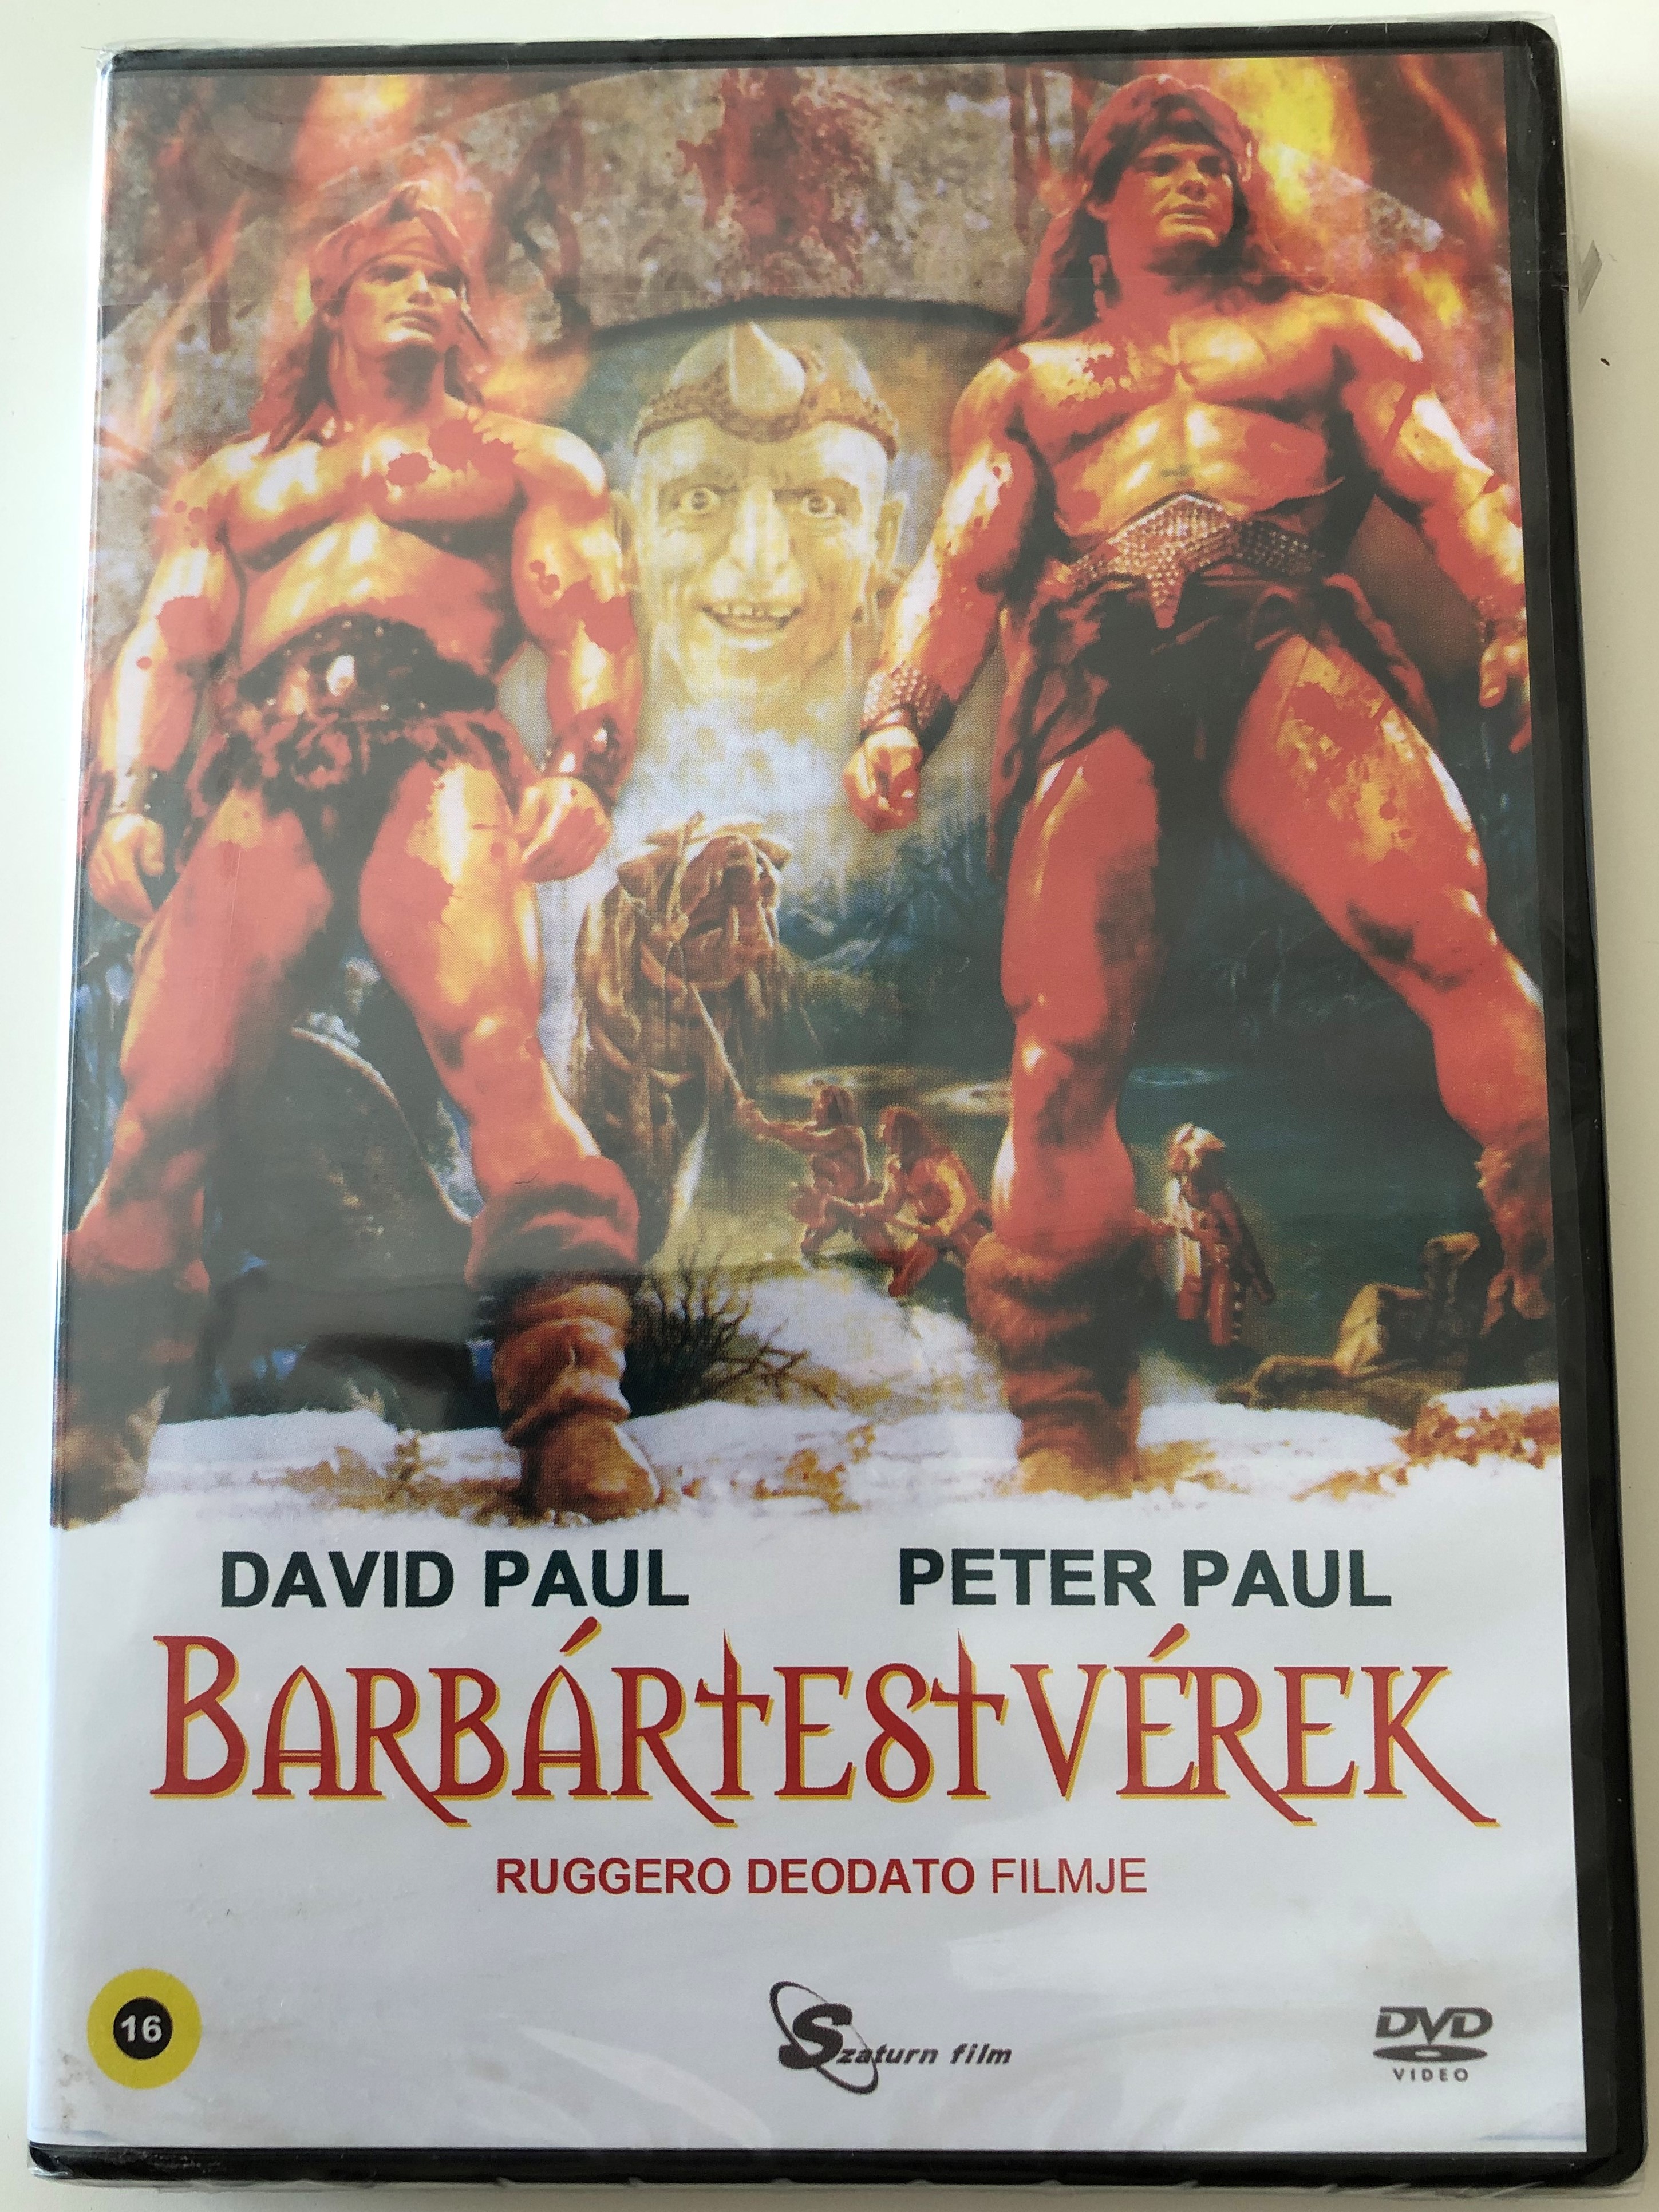 The Barbarians DVD 1987 Barbártestvérek / Directed by Ruggero Deodato /  Starring: Peter Paul, David Paul - bibleinmylanguage